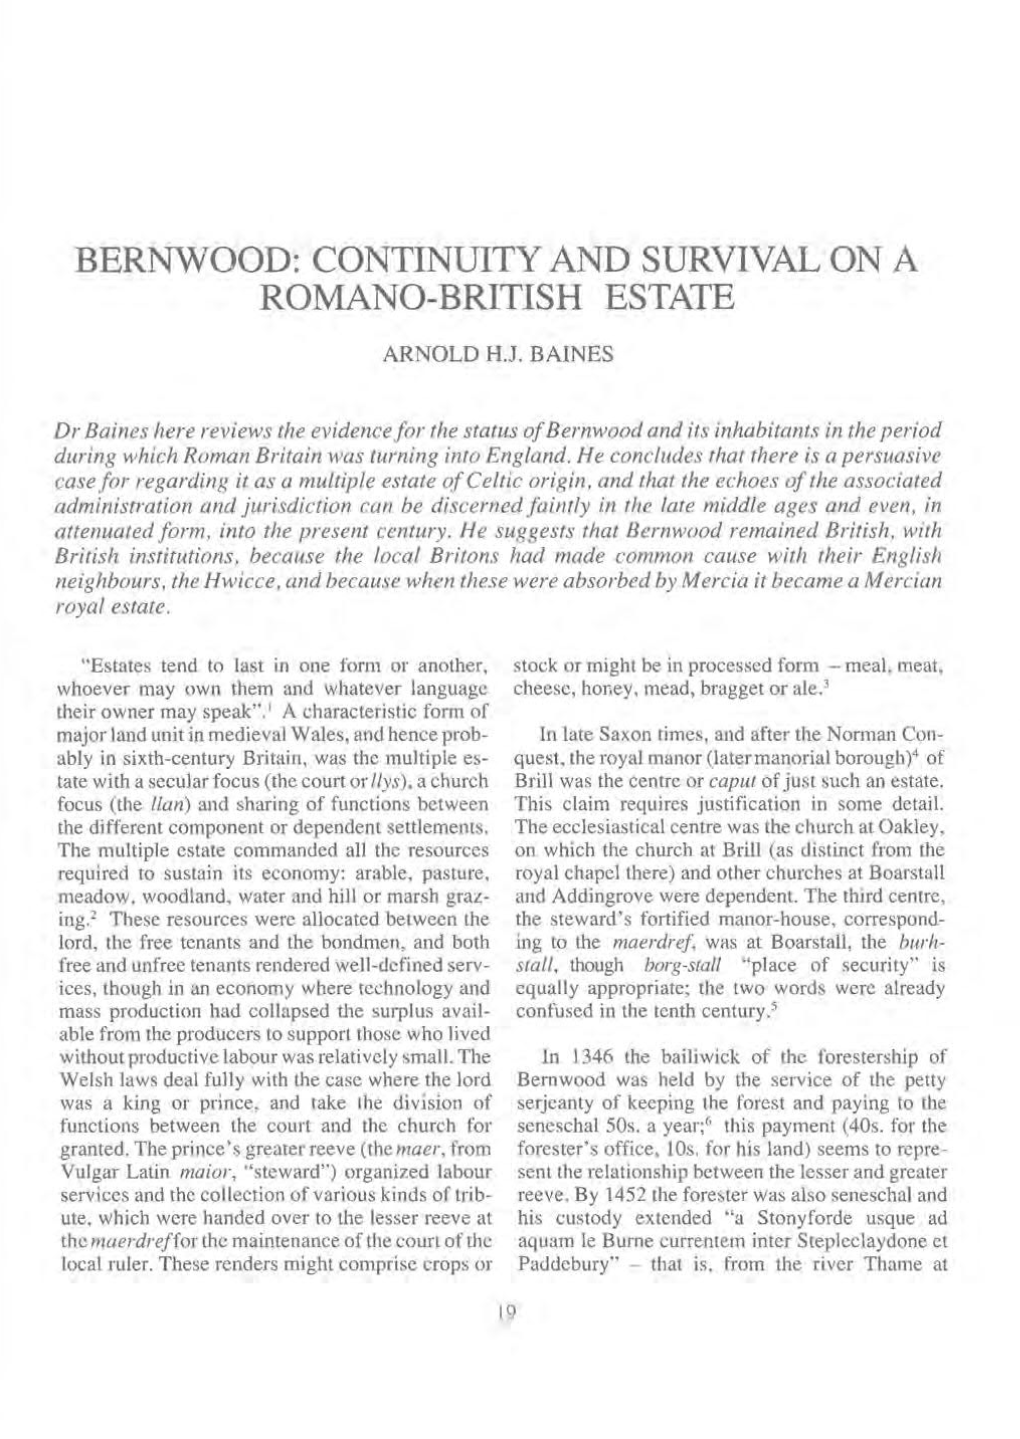 Bernwood: Continuity and Survival on a Romano-British Estate